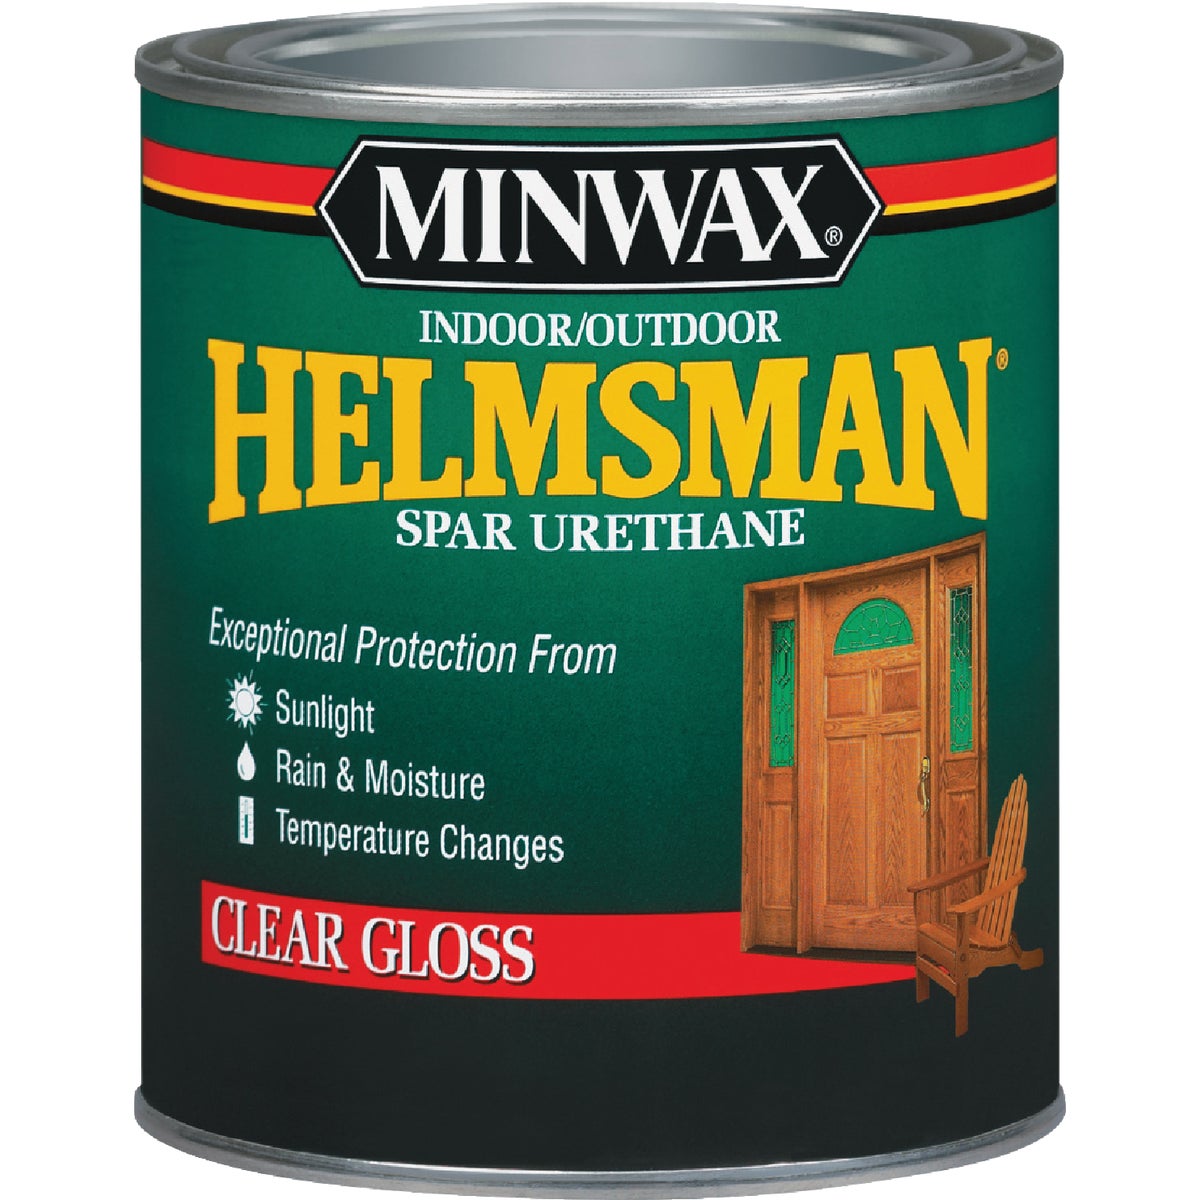 Minwax Helmsman Gloss Clear Spar Urethane, 1 Qt.